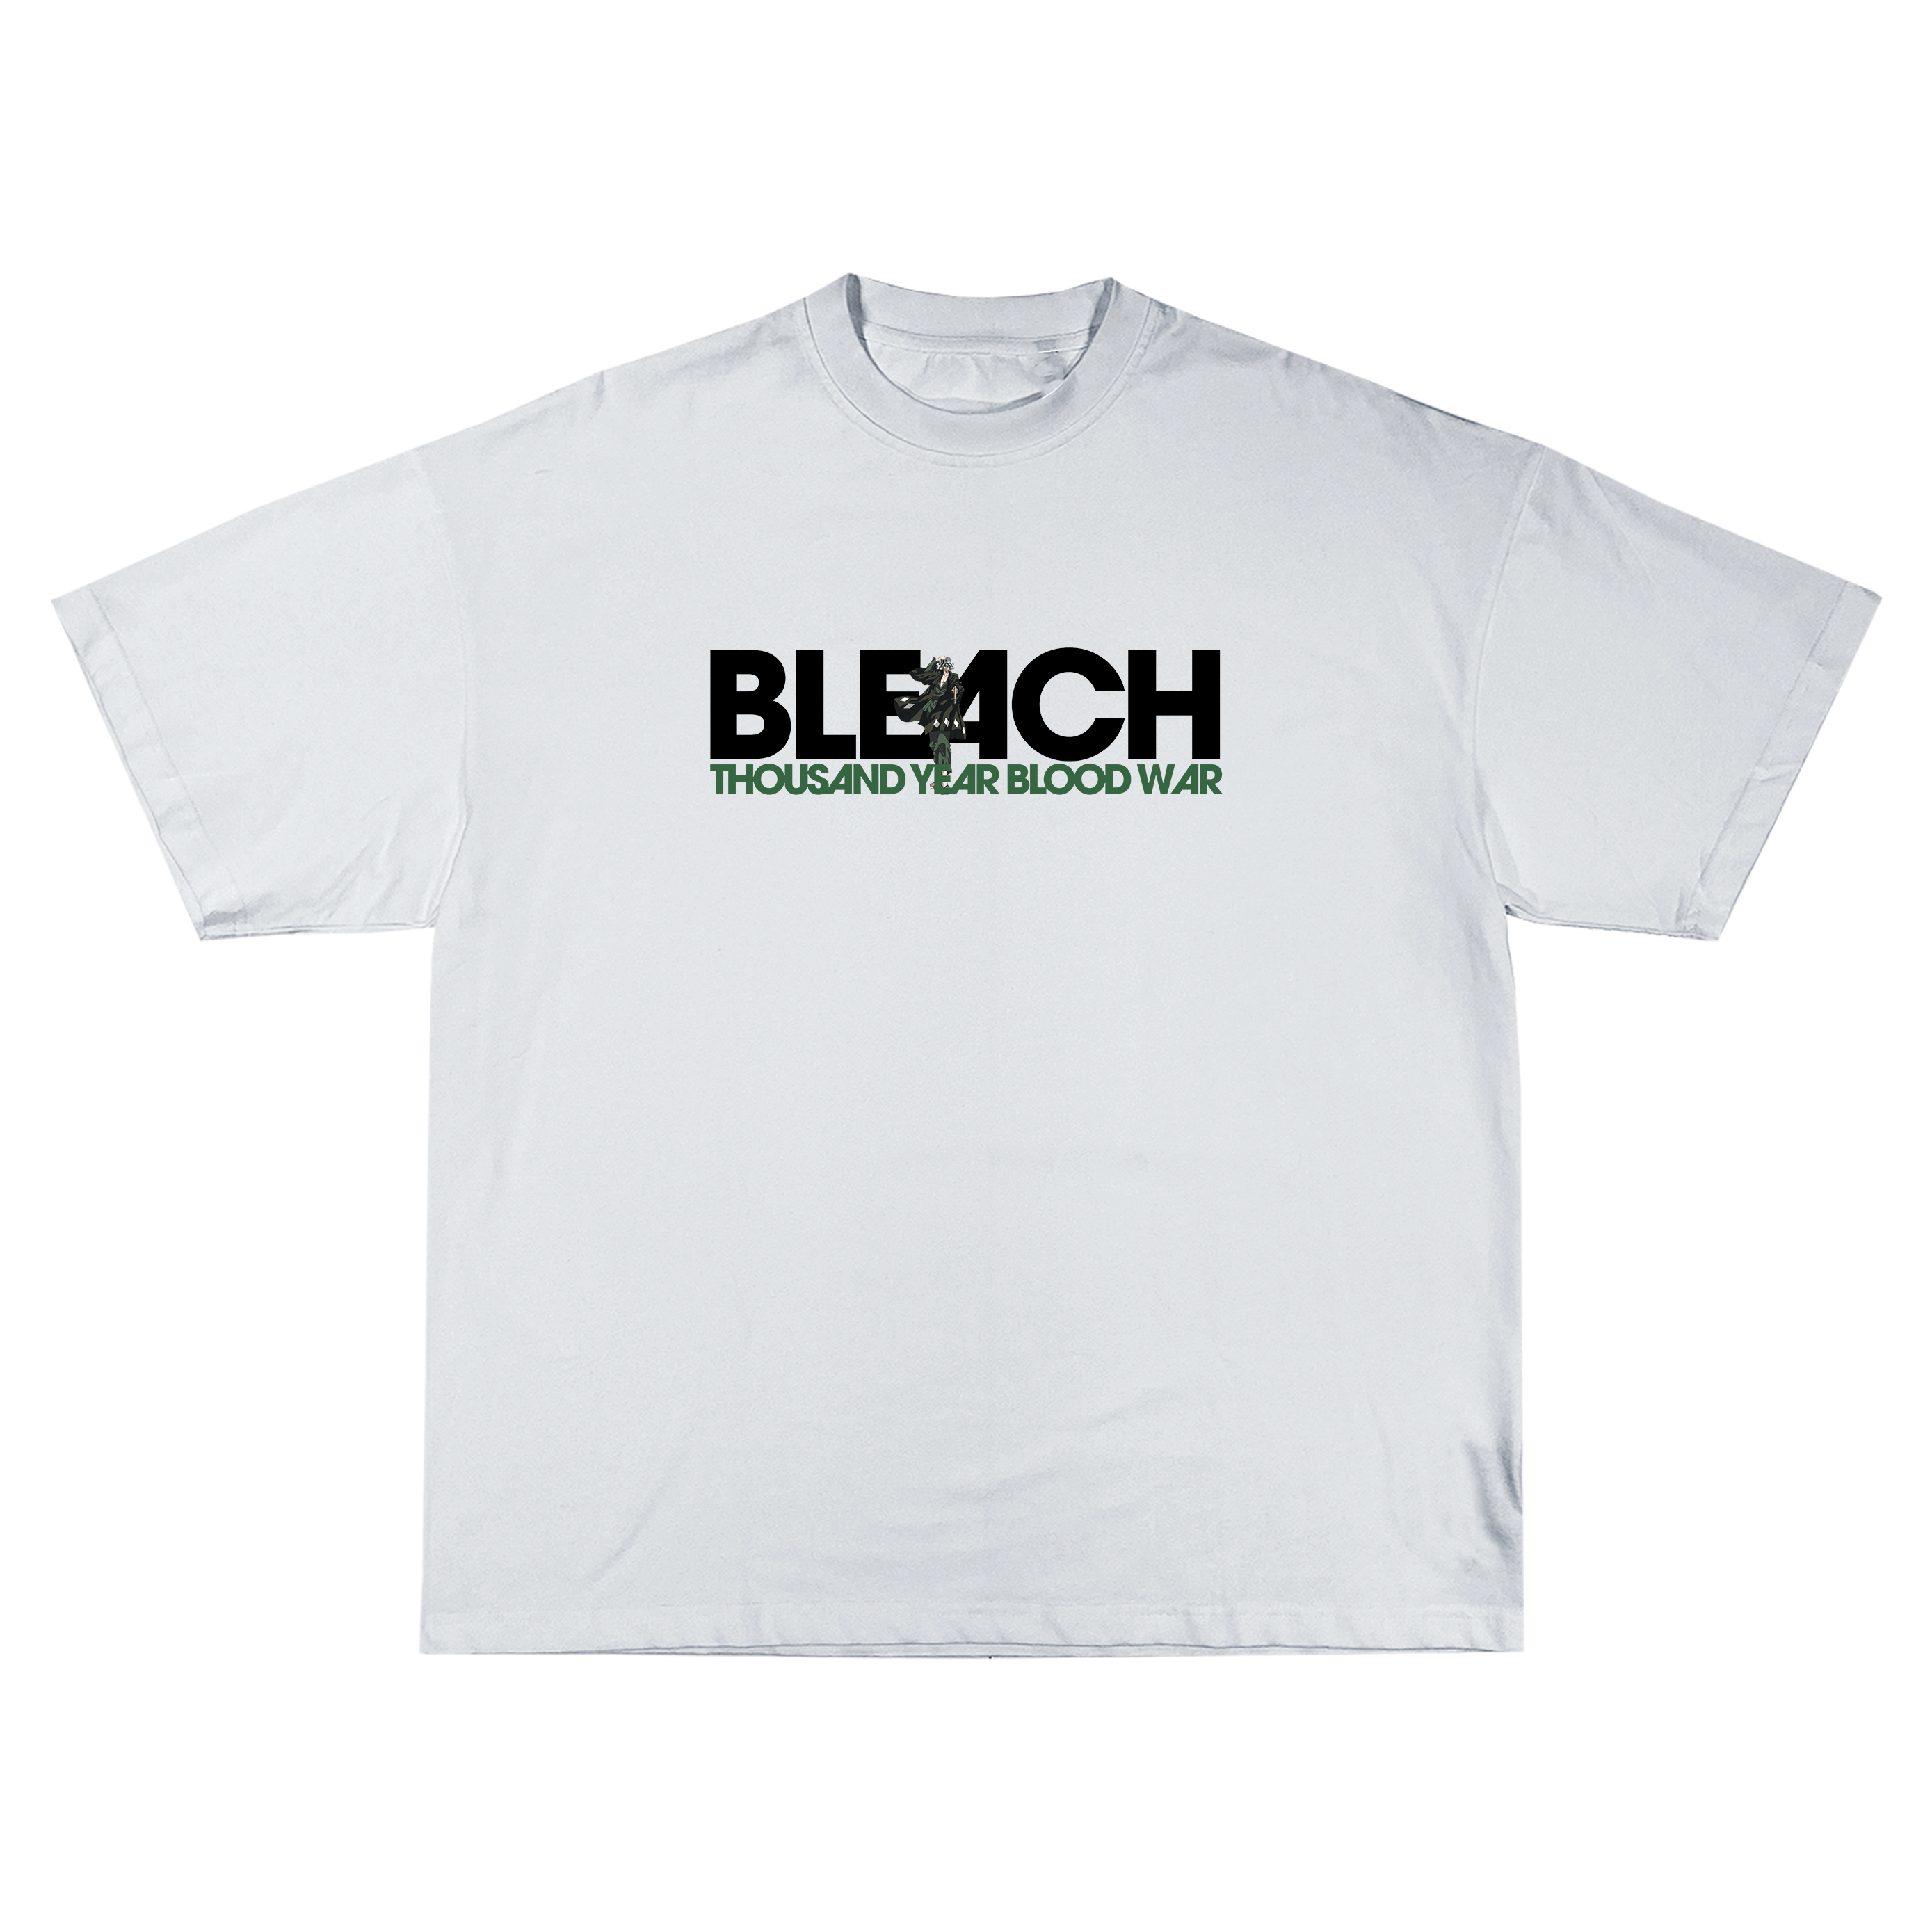 Kisuke Urahara Bleach | White T-Shirt TYBW